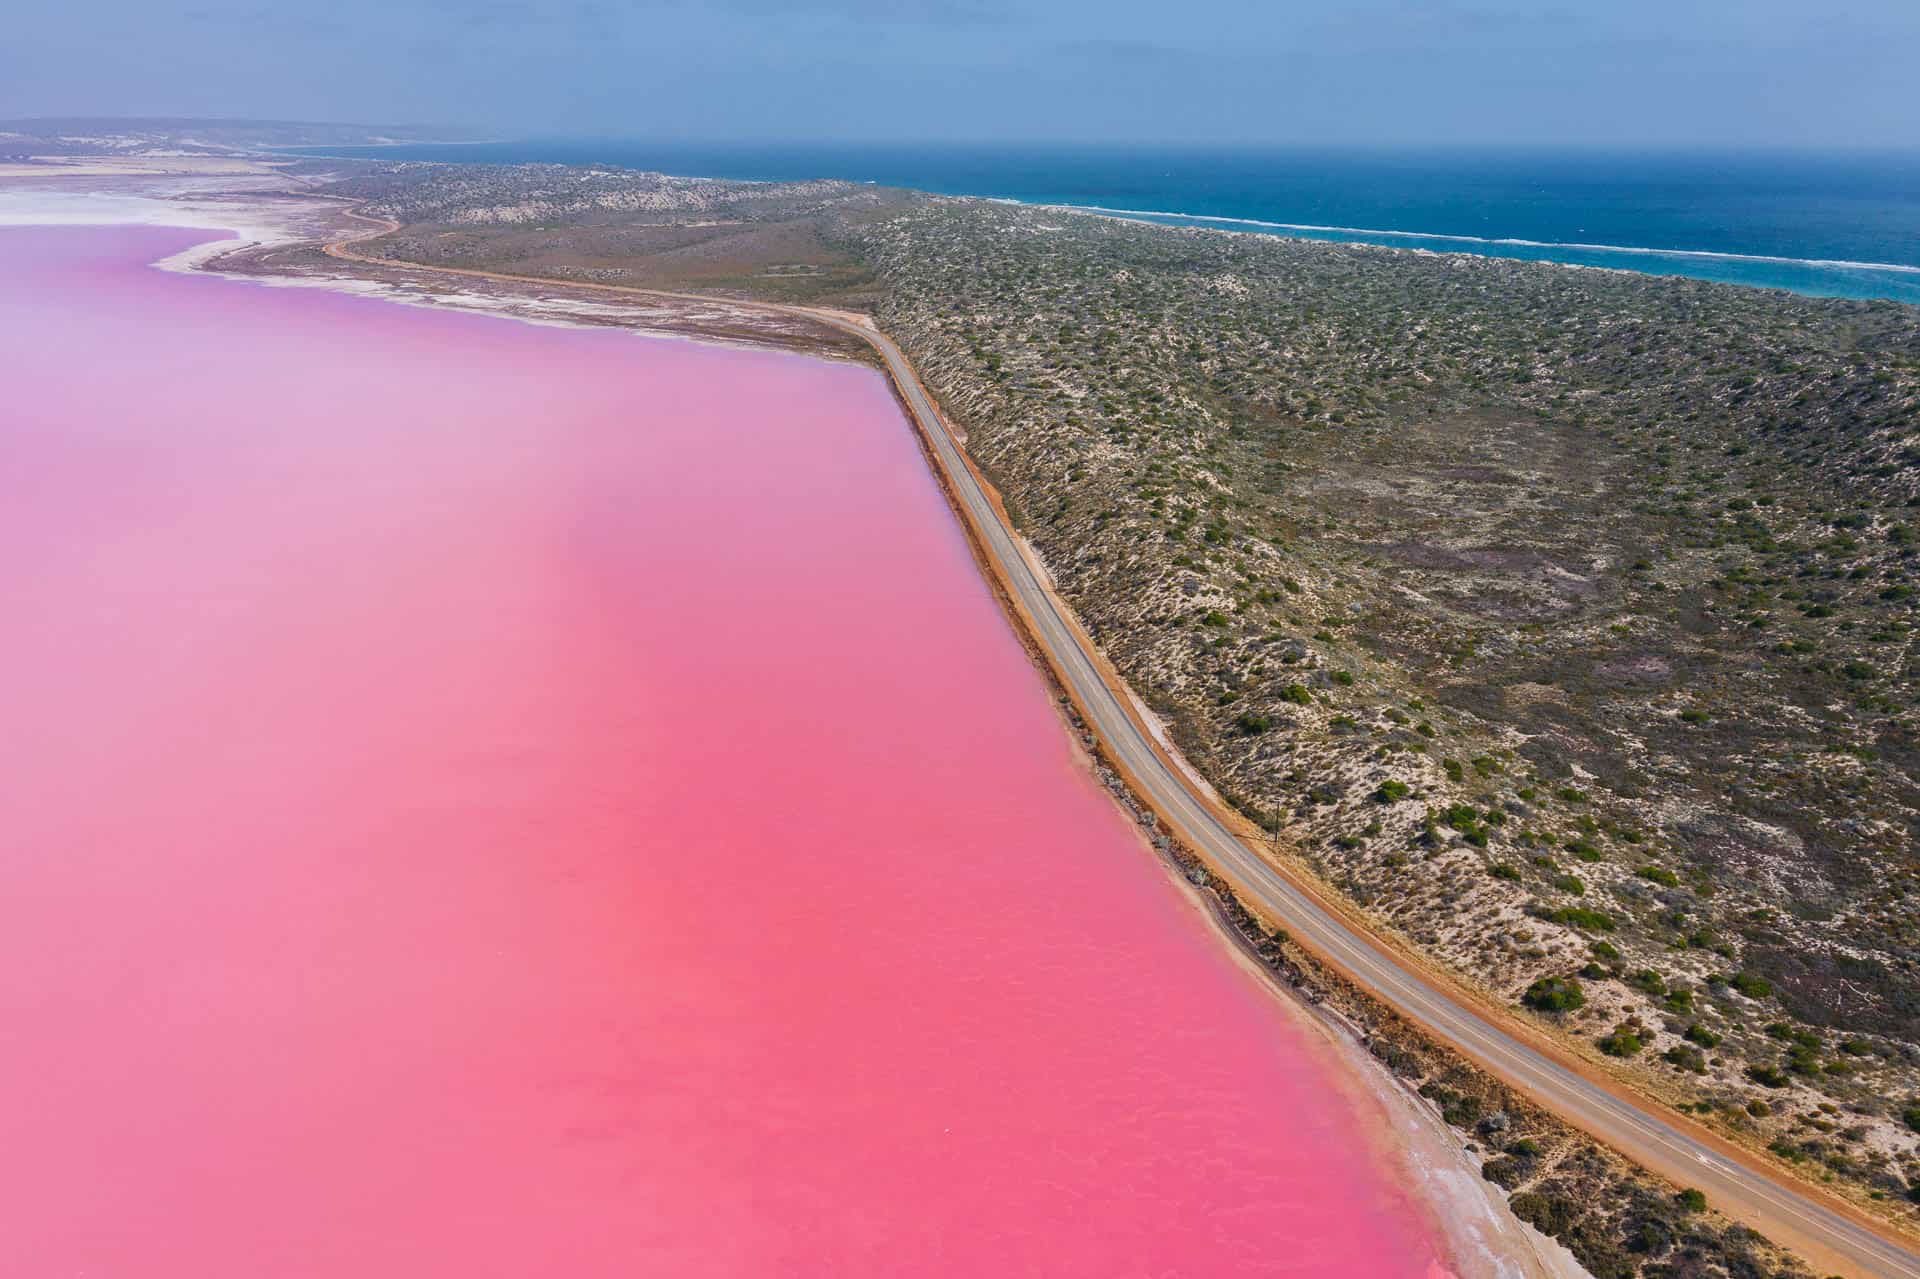 pink lake western australia, hutt lagooon, hutt lagoon pink lake, western australia pink lake, pink lake australia